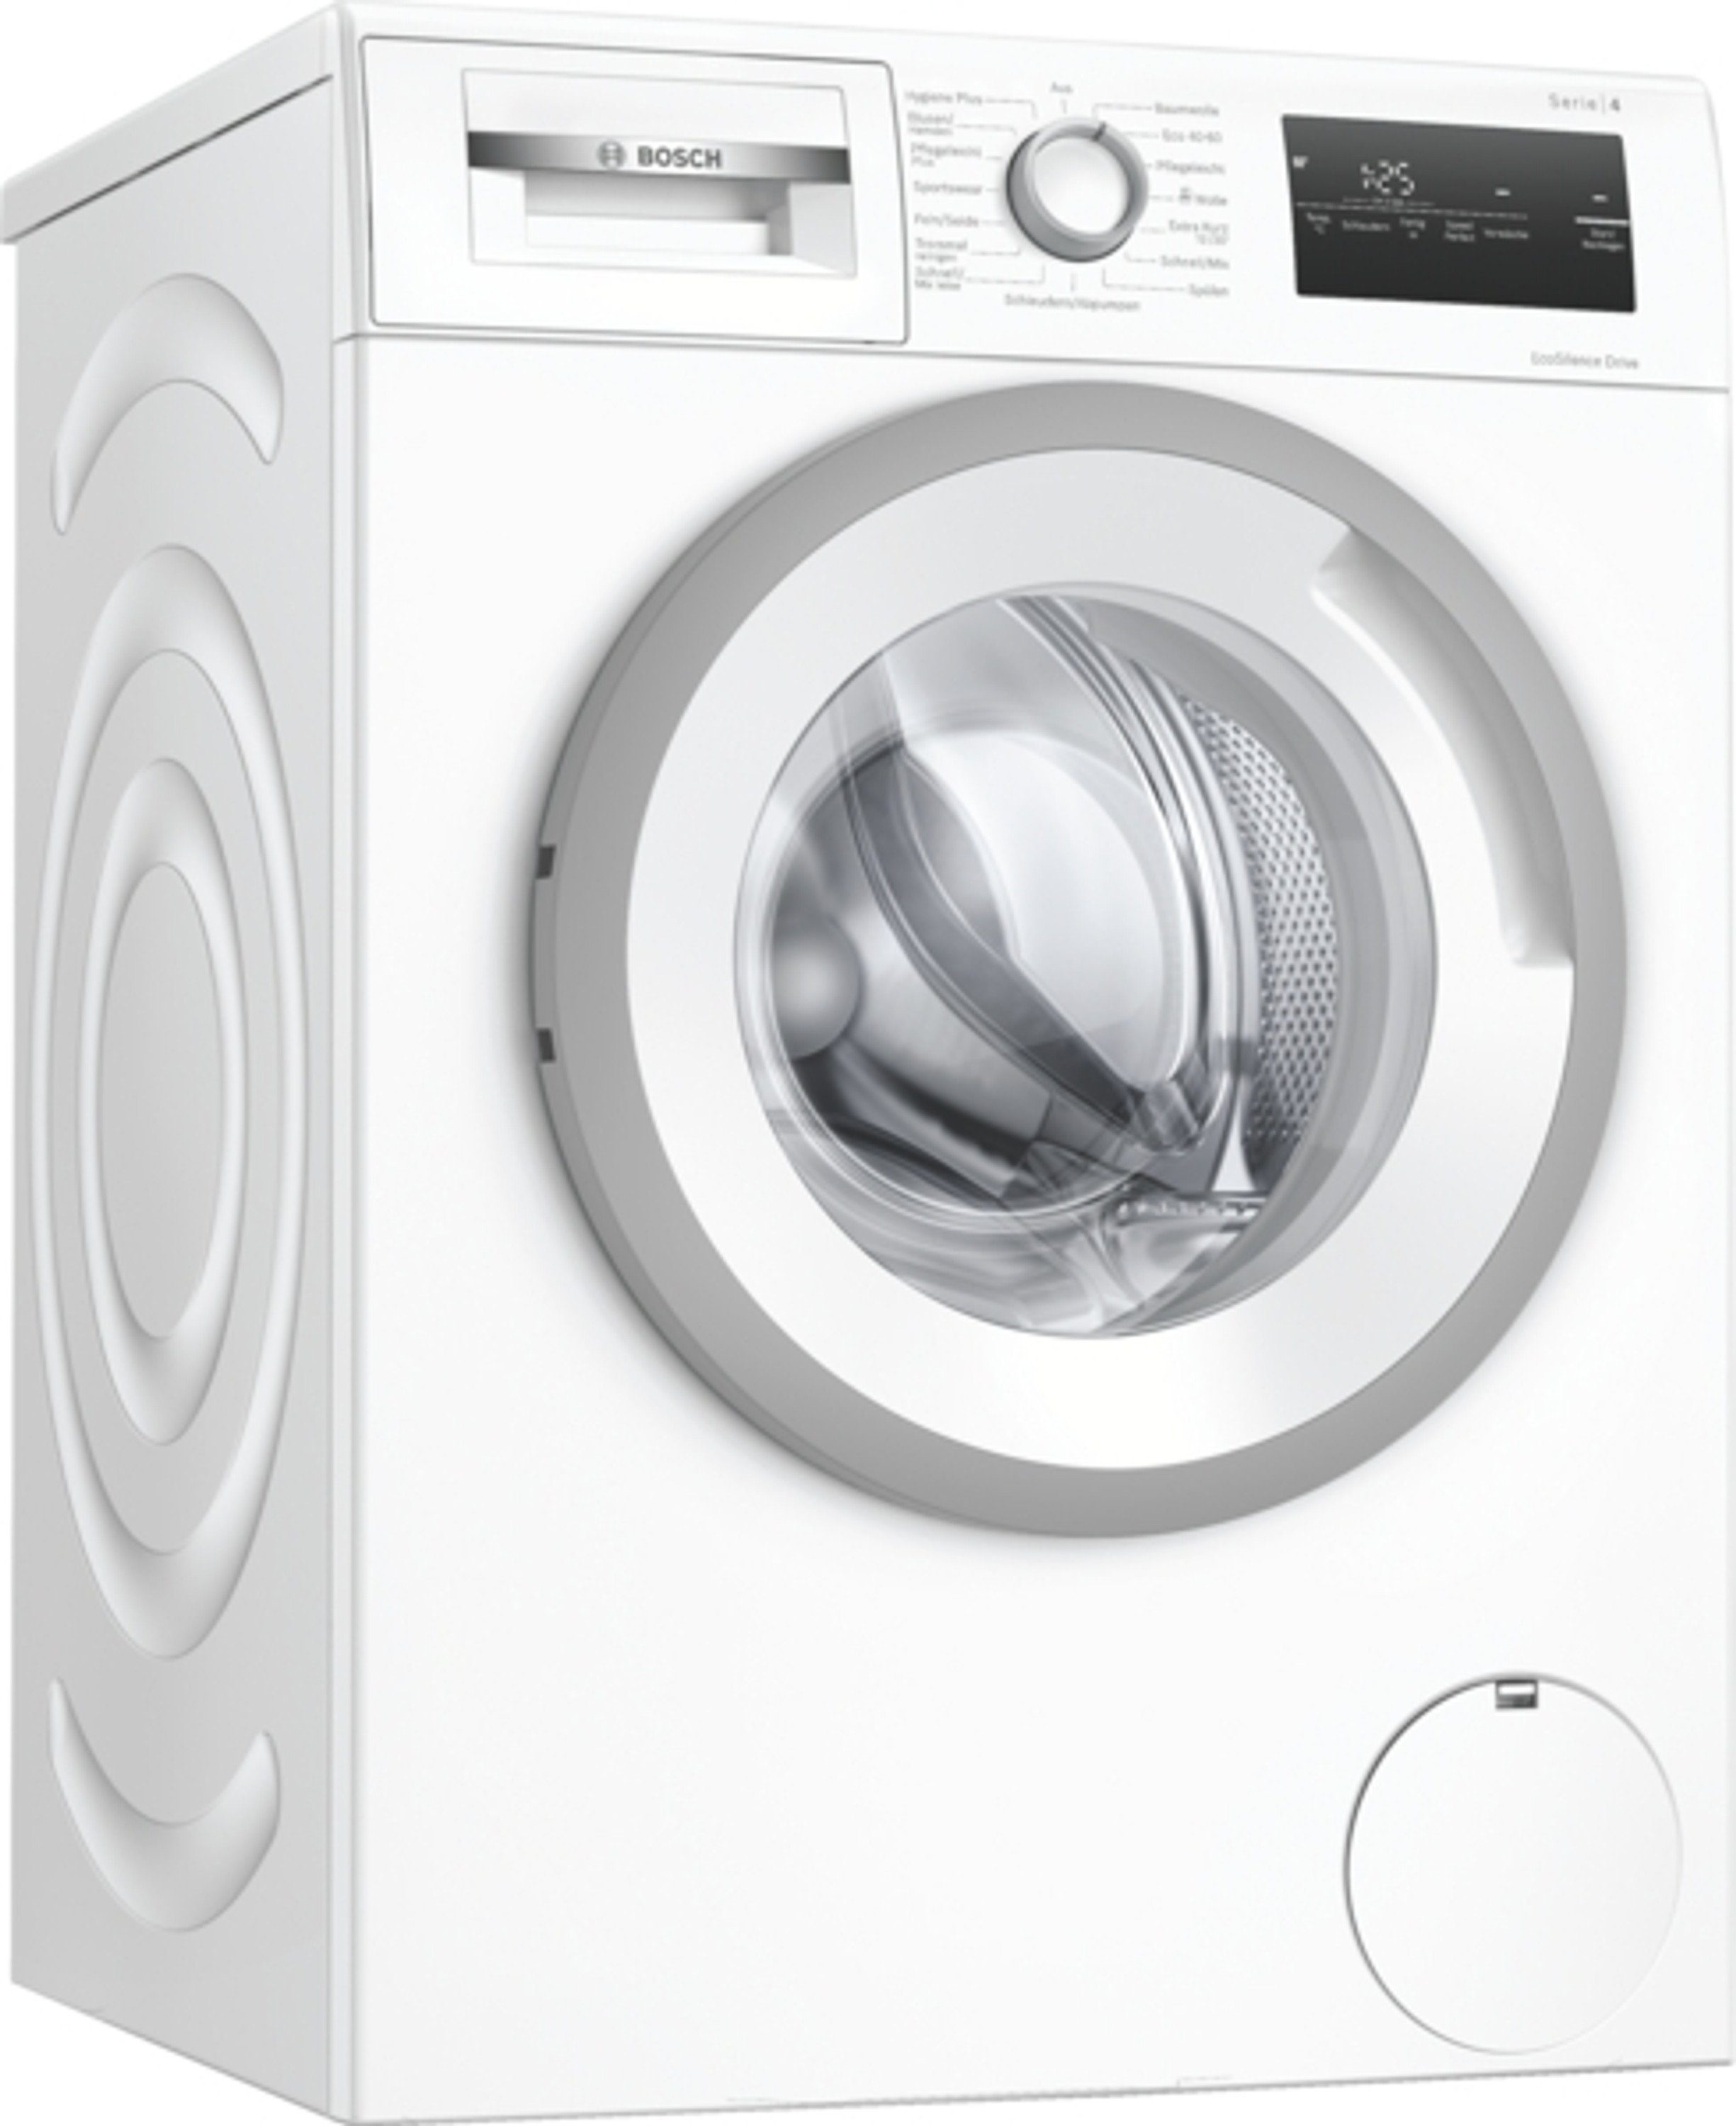 BOSCH Waschmaschine WAN28123, 7 kg, Silence Perfect Hygiene U/min, 1400 Speed Plus, Drive, Eco